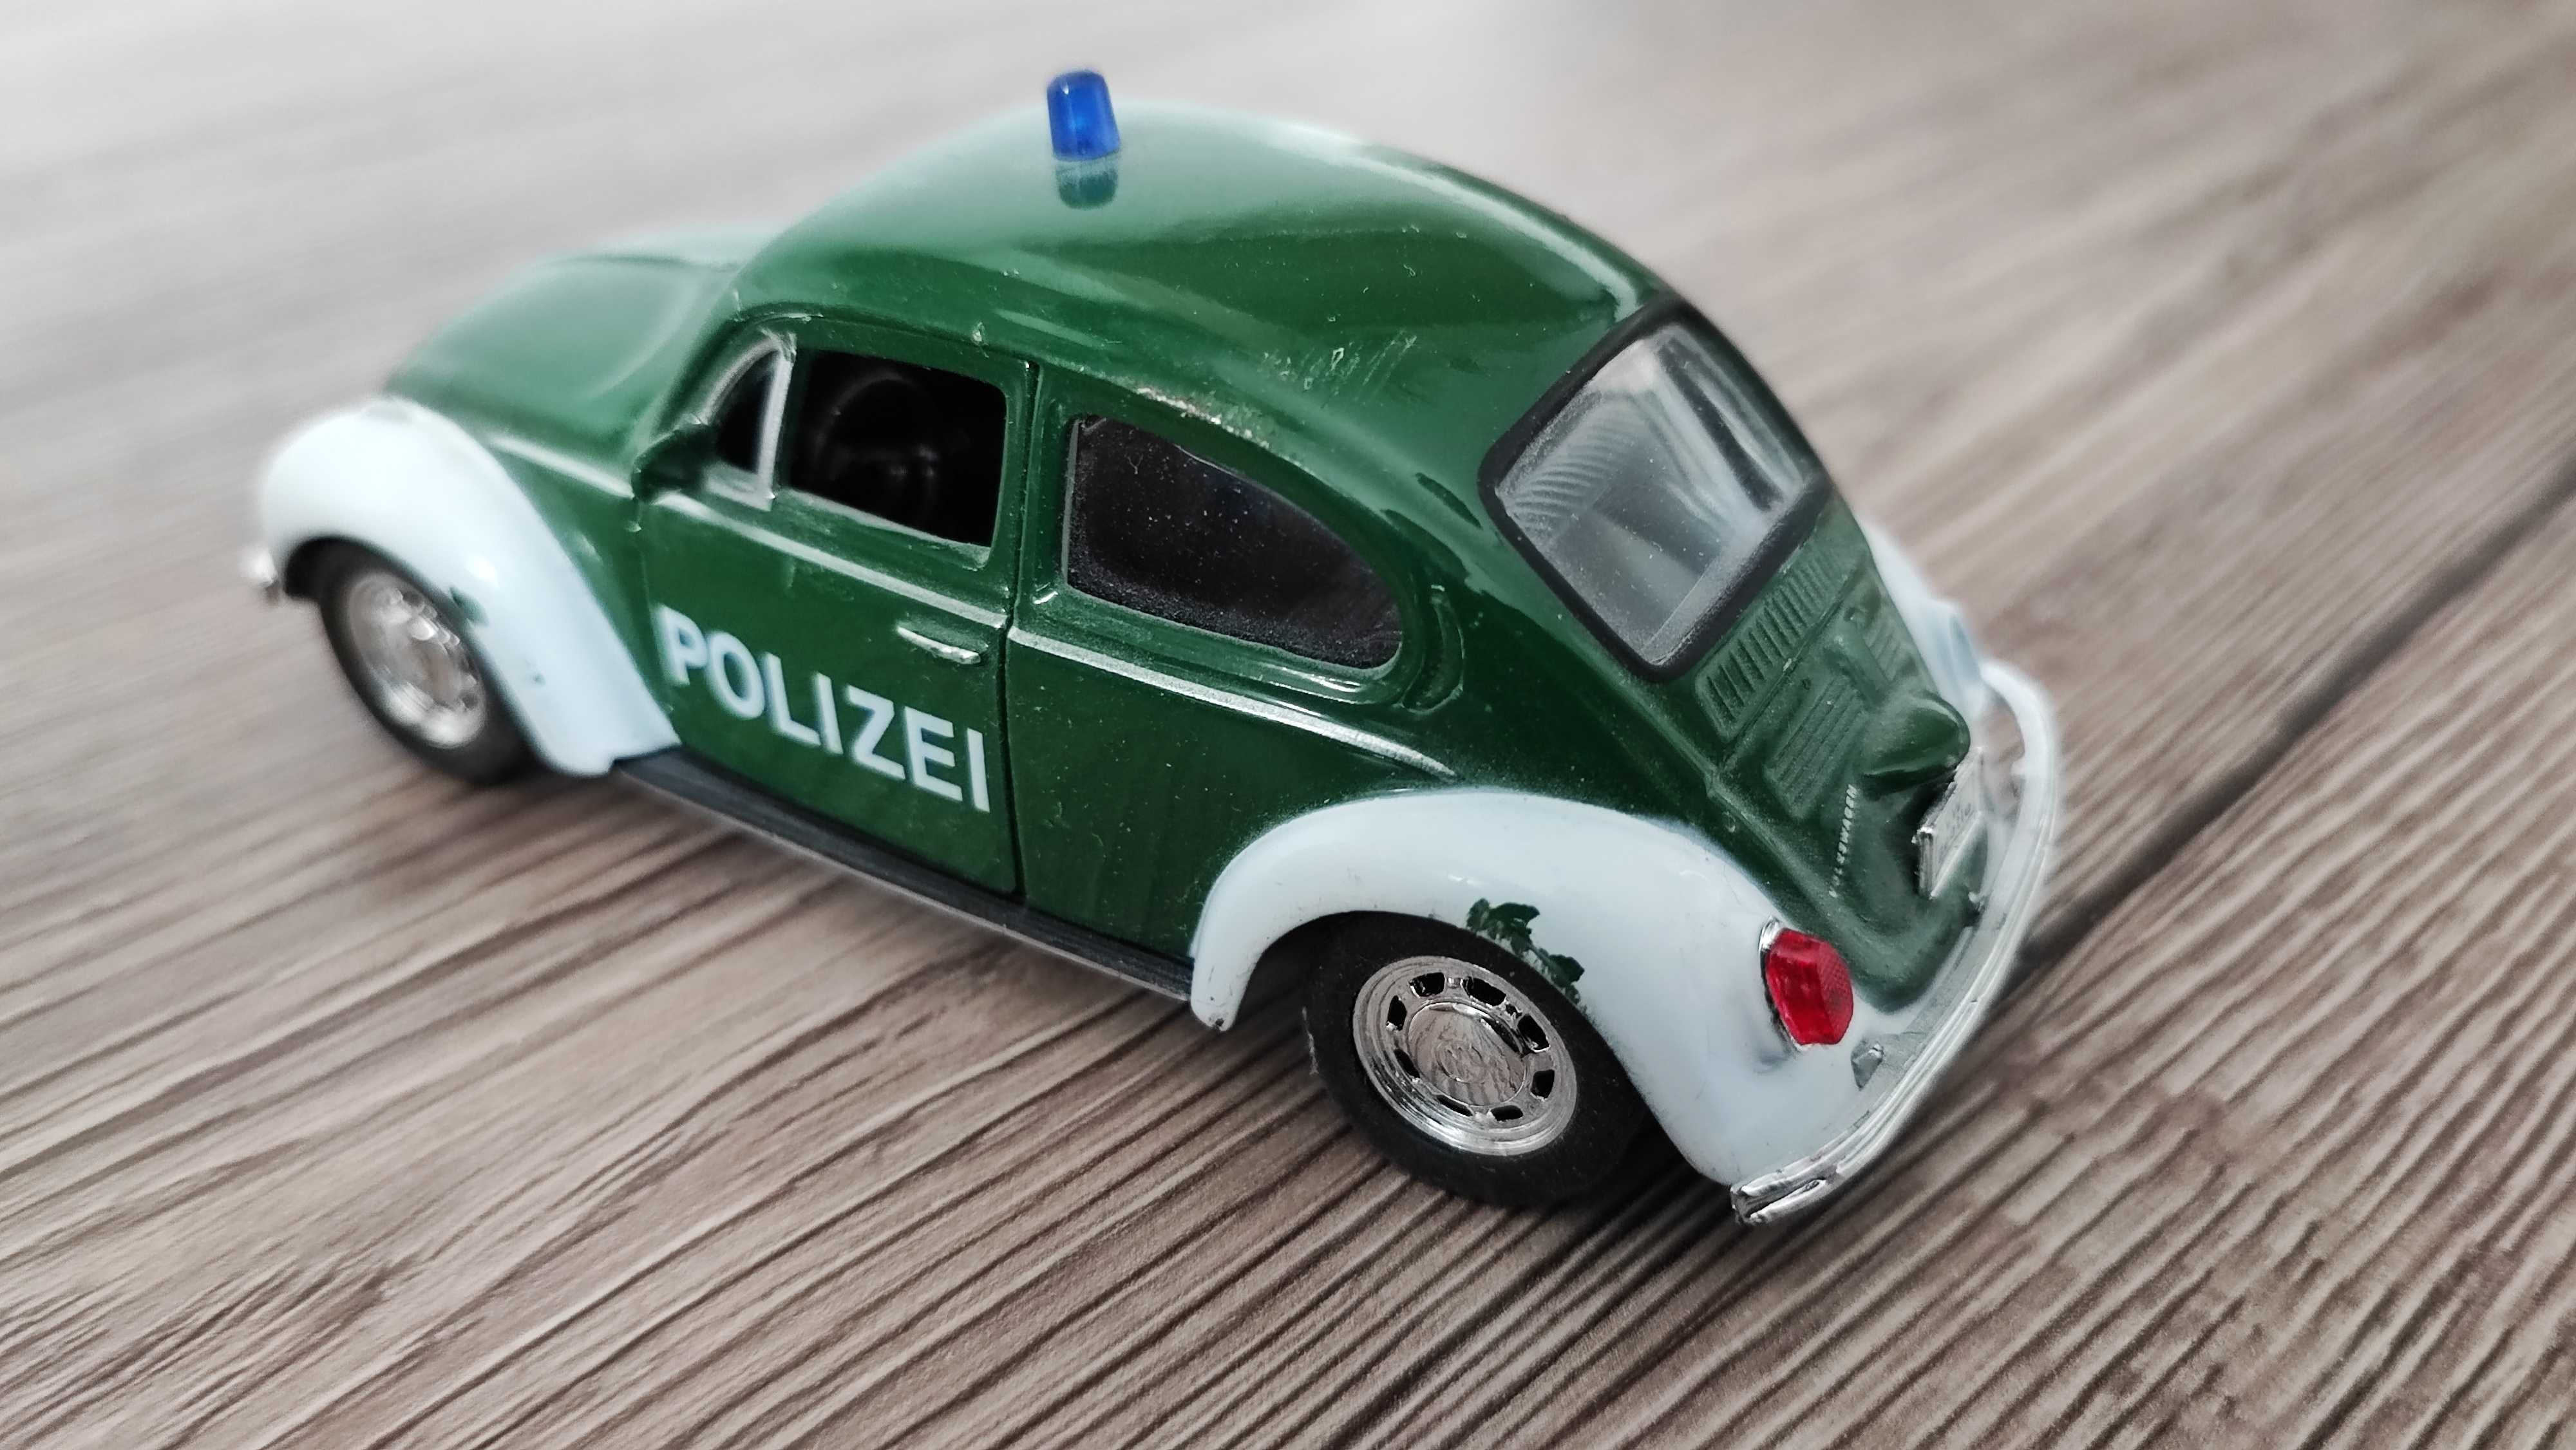 VW Garbus policja w skali 1:32